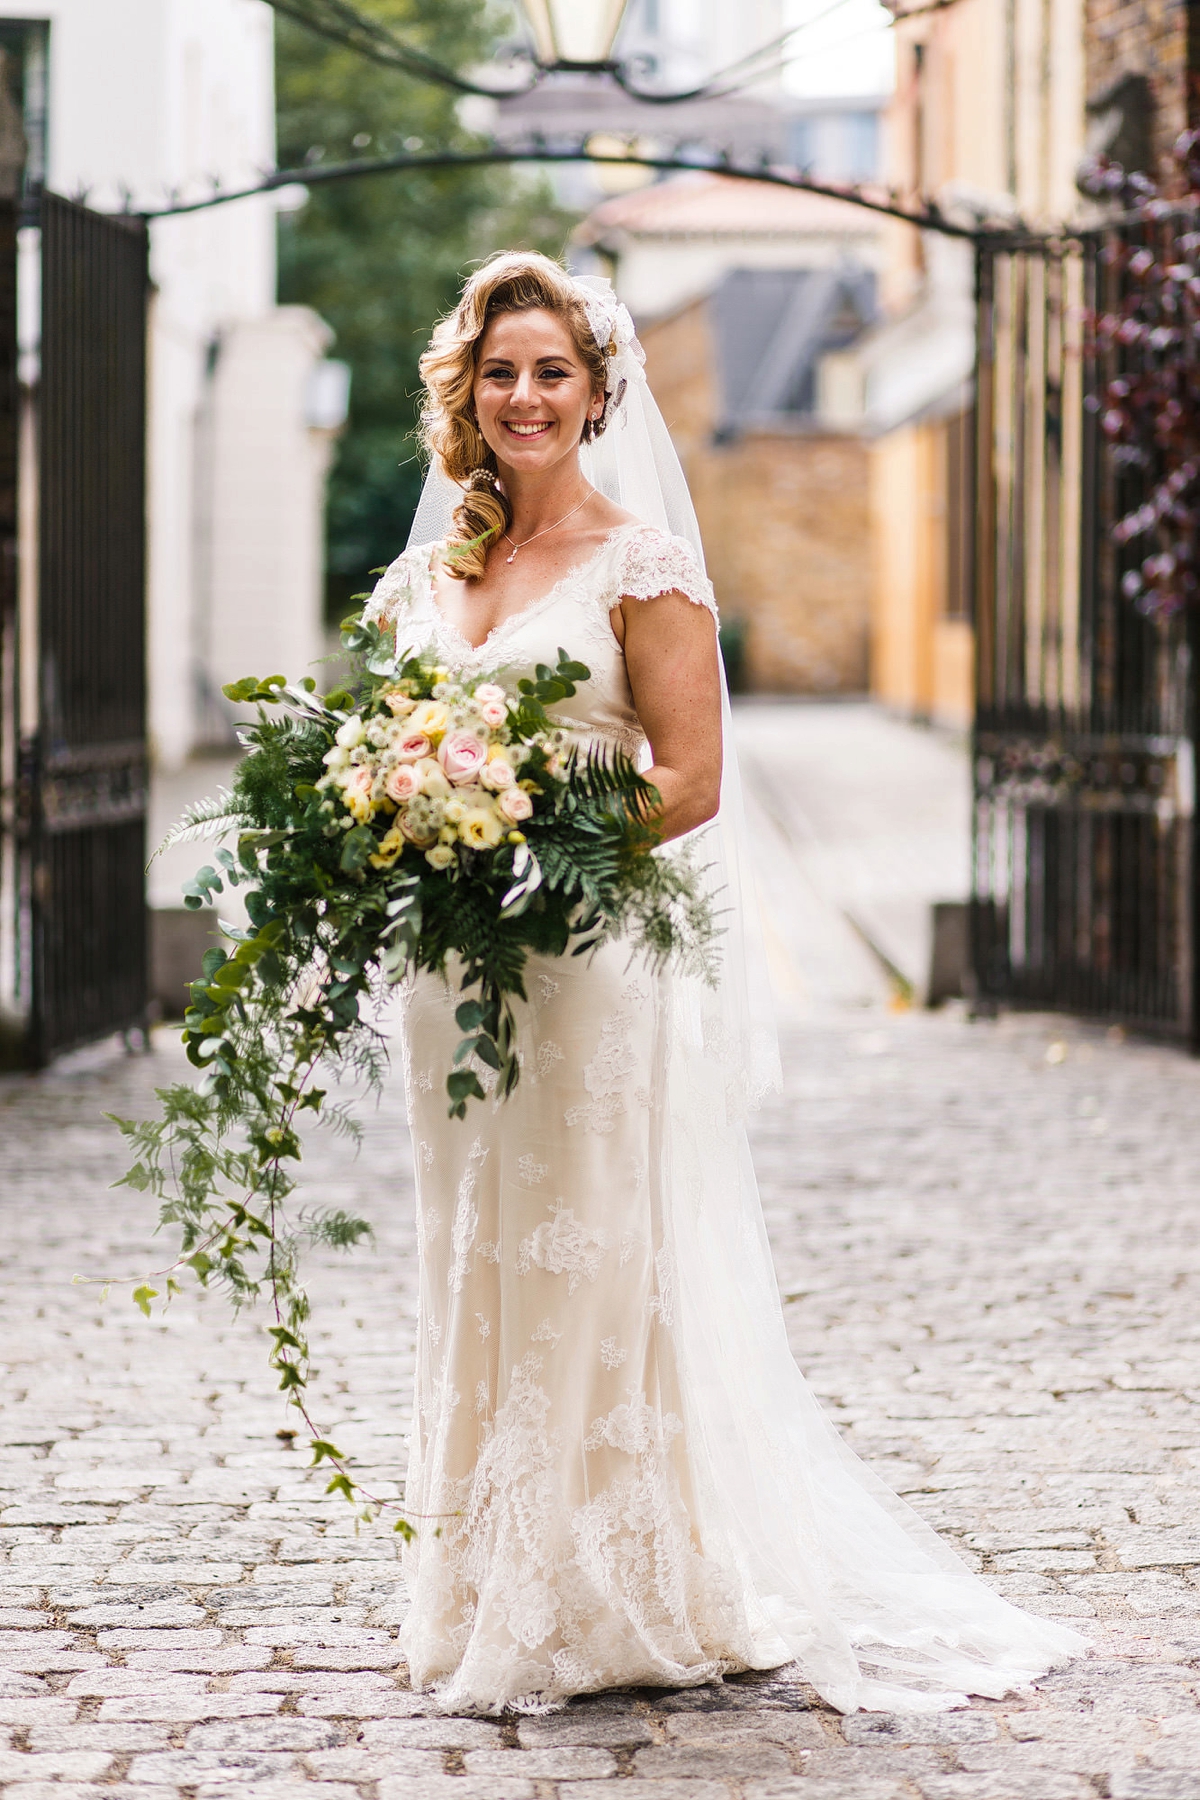 13 Sharon Hoey wedding dress and oversized bouquet